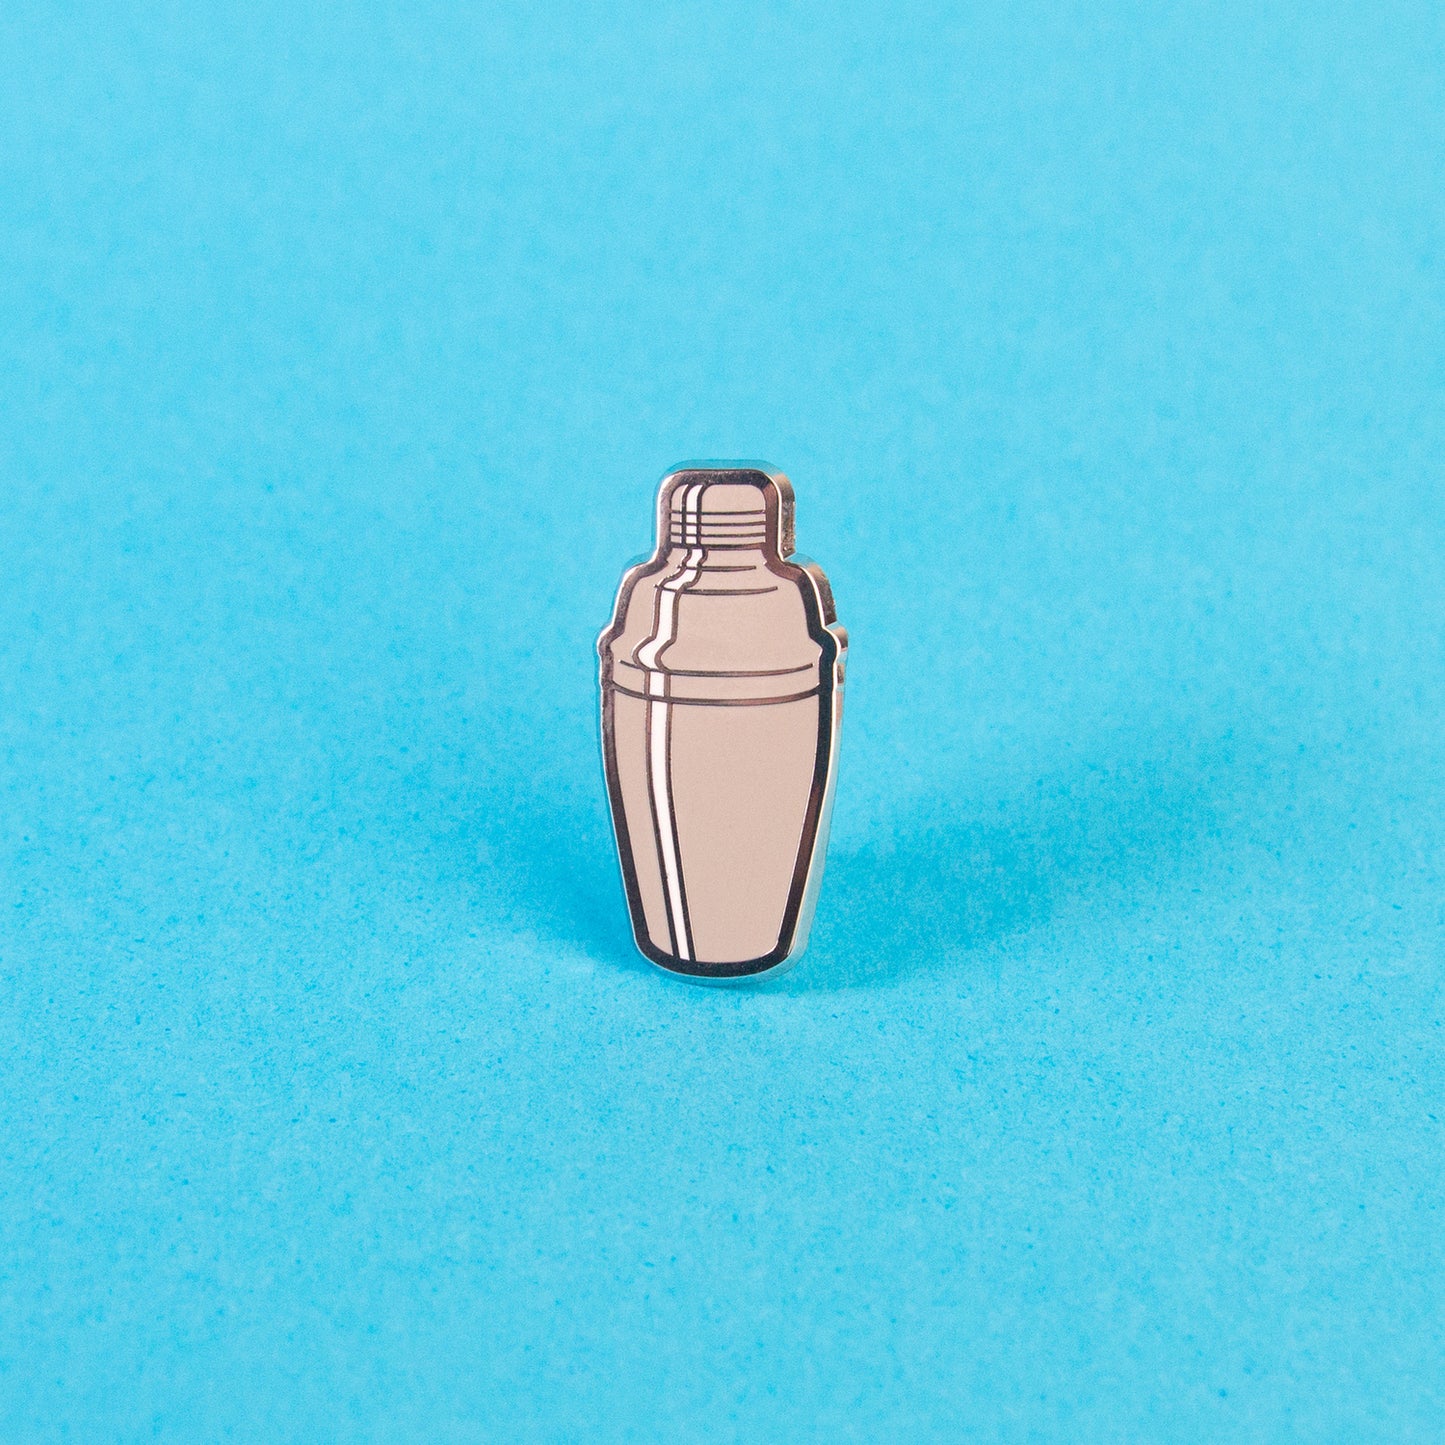 Vintage Cocktail Shaker Pin